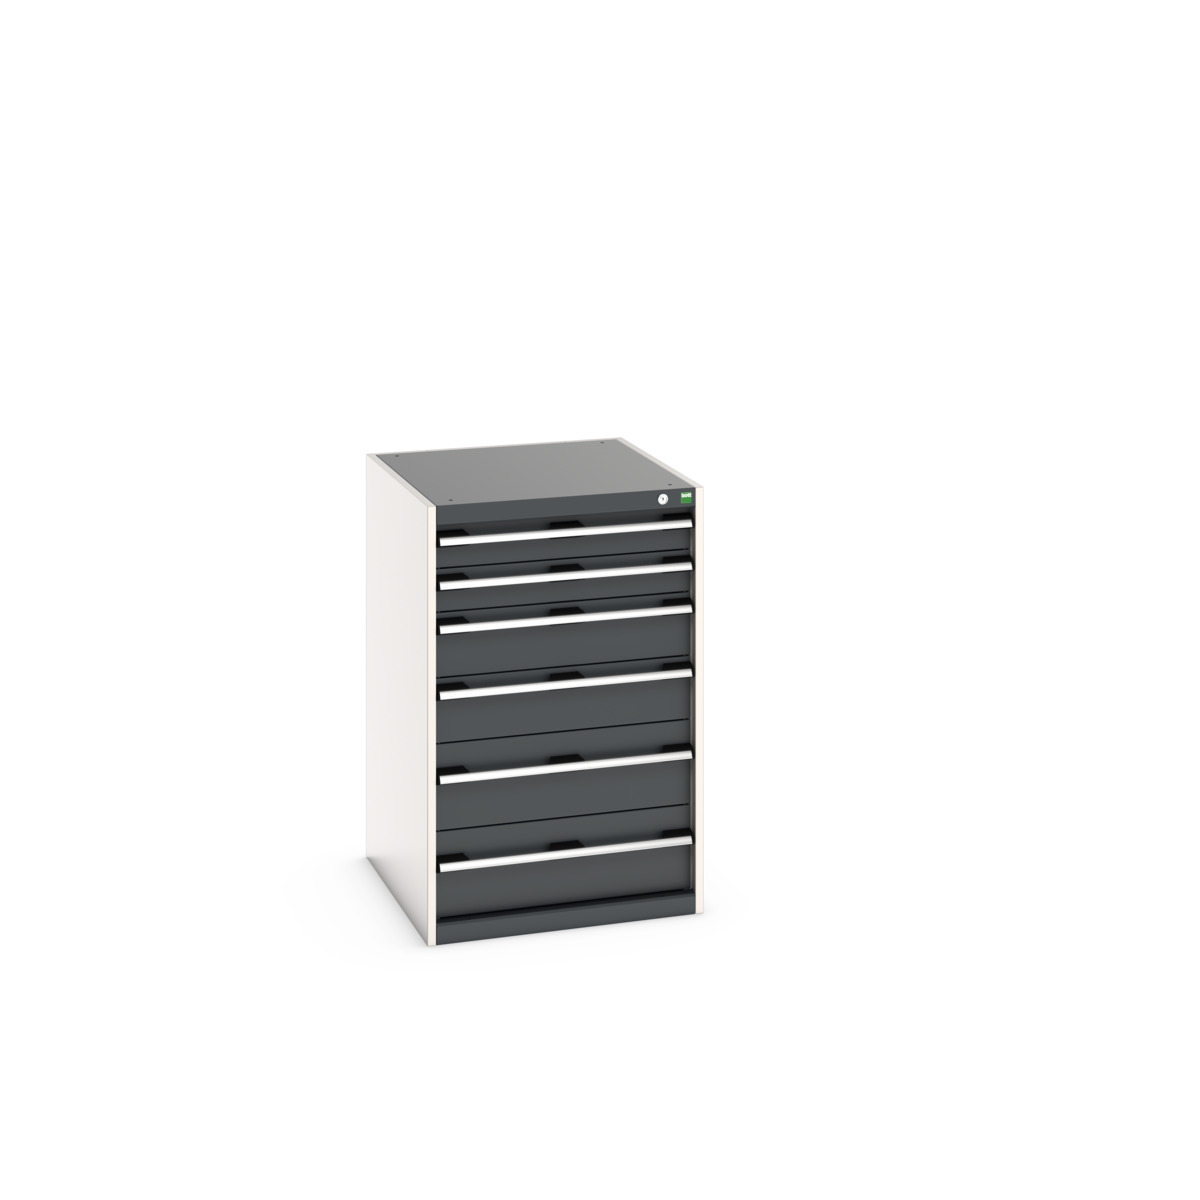 40027027. - cubio drawer cabinet